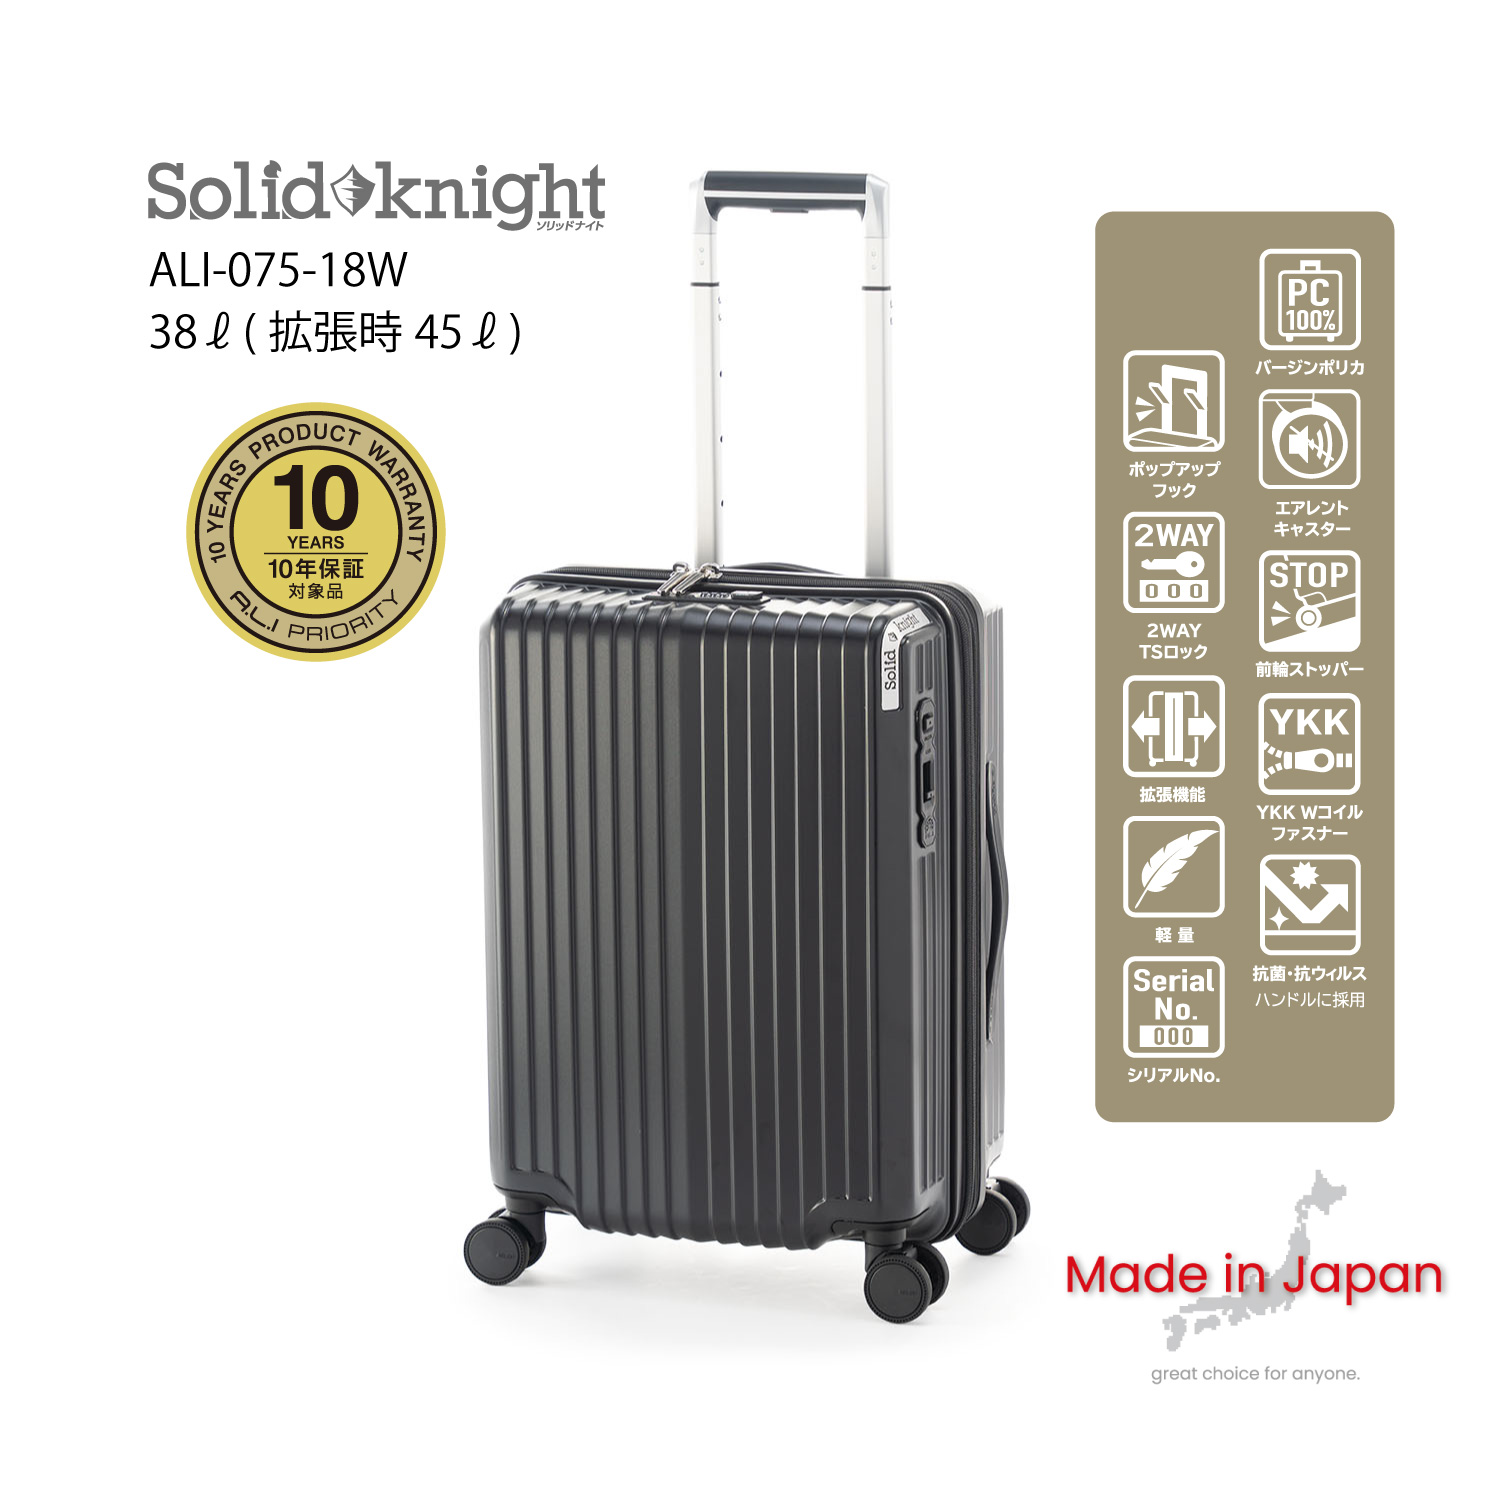 Solid knight | アジア・ラゲージ 公式サイト | Asia Luggage Inc.